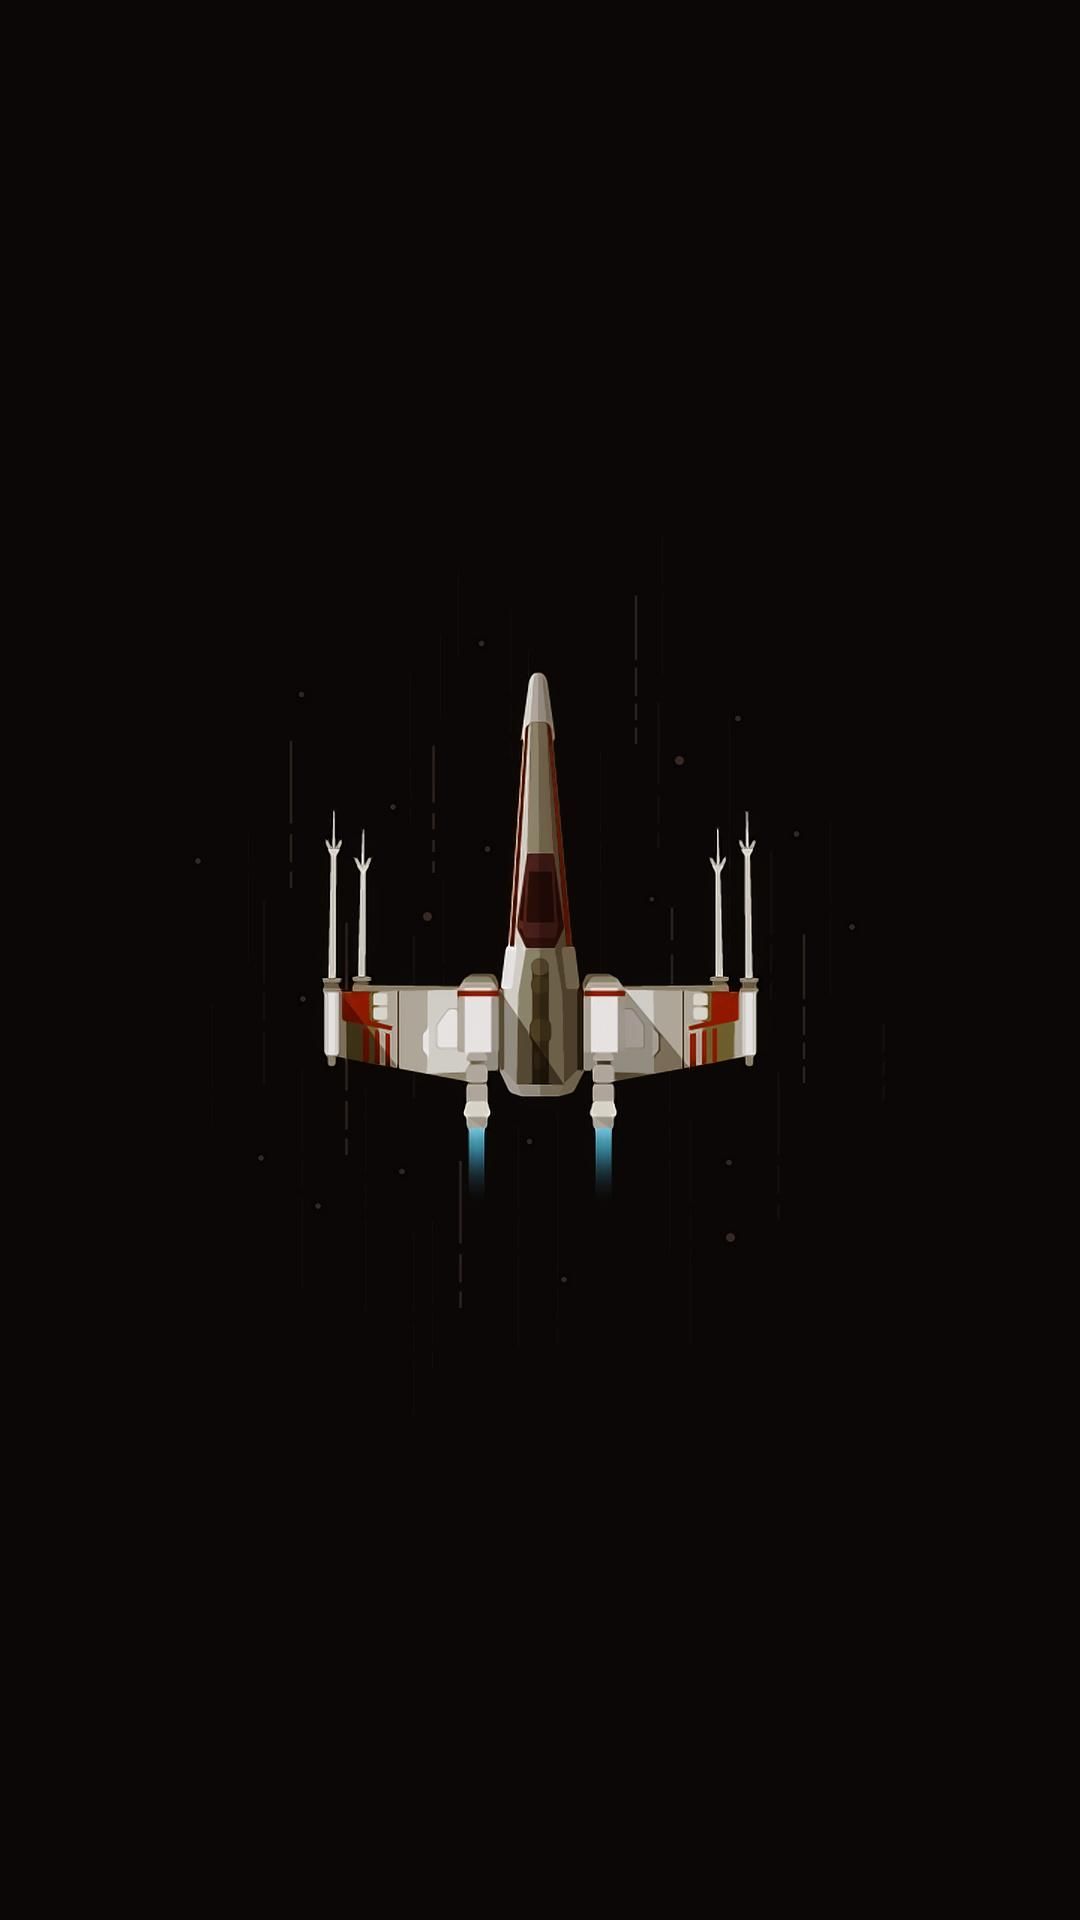 X Wing Fighter. Star wars wallpaper, Star wars poster, Star wars